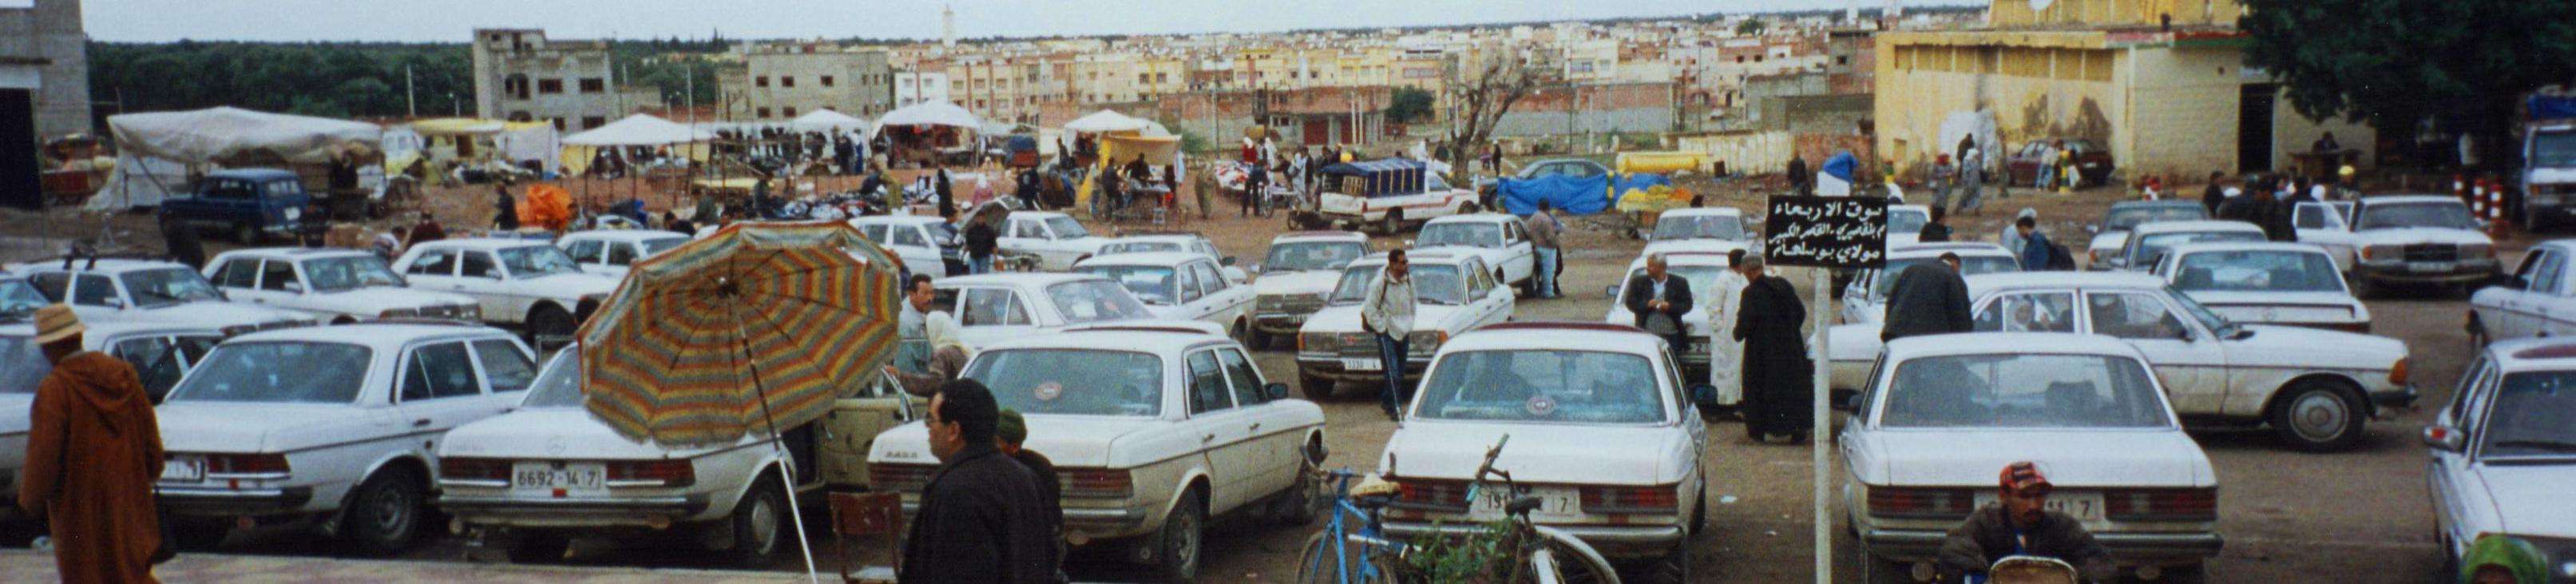 Mercedez Benz Heaven | Morocco Travel Blog | Grand Taxi - What Happens To A Mercedez Benz When It Dies | Morocco Travel Blog | Author: Anthony Bianco - The Travel Tart Blog